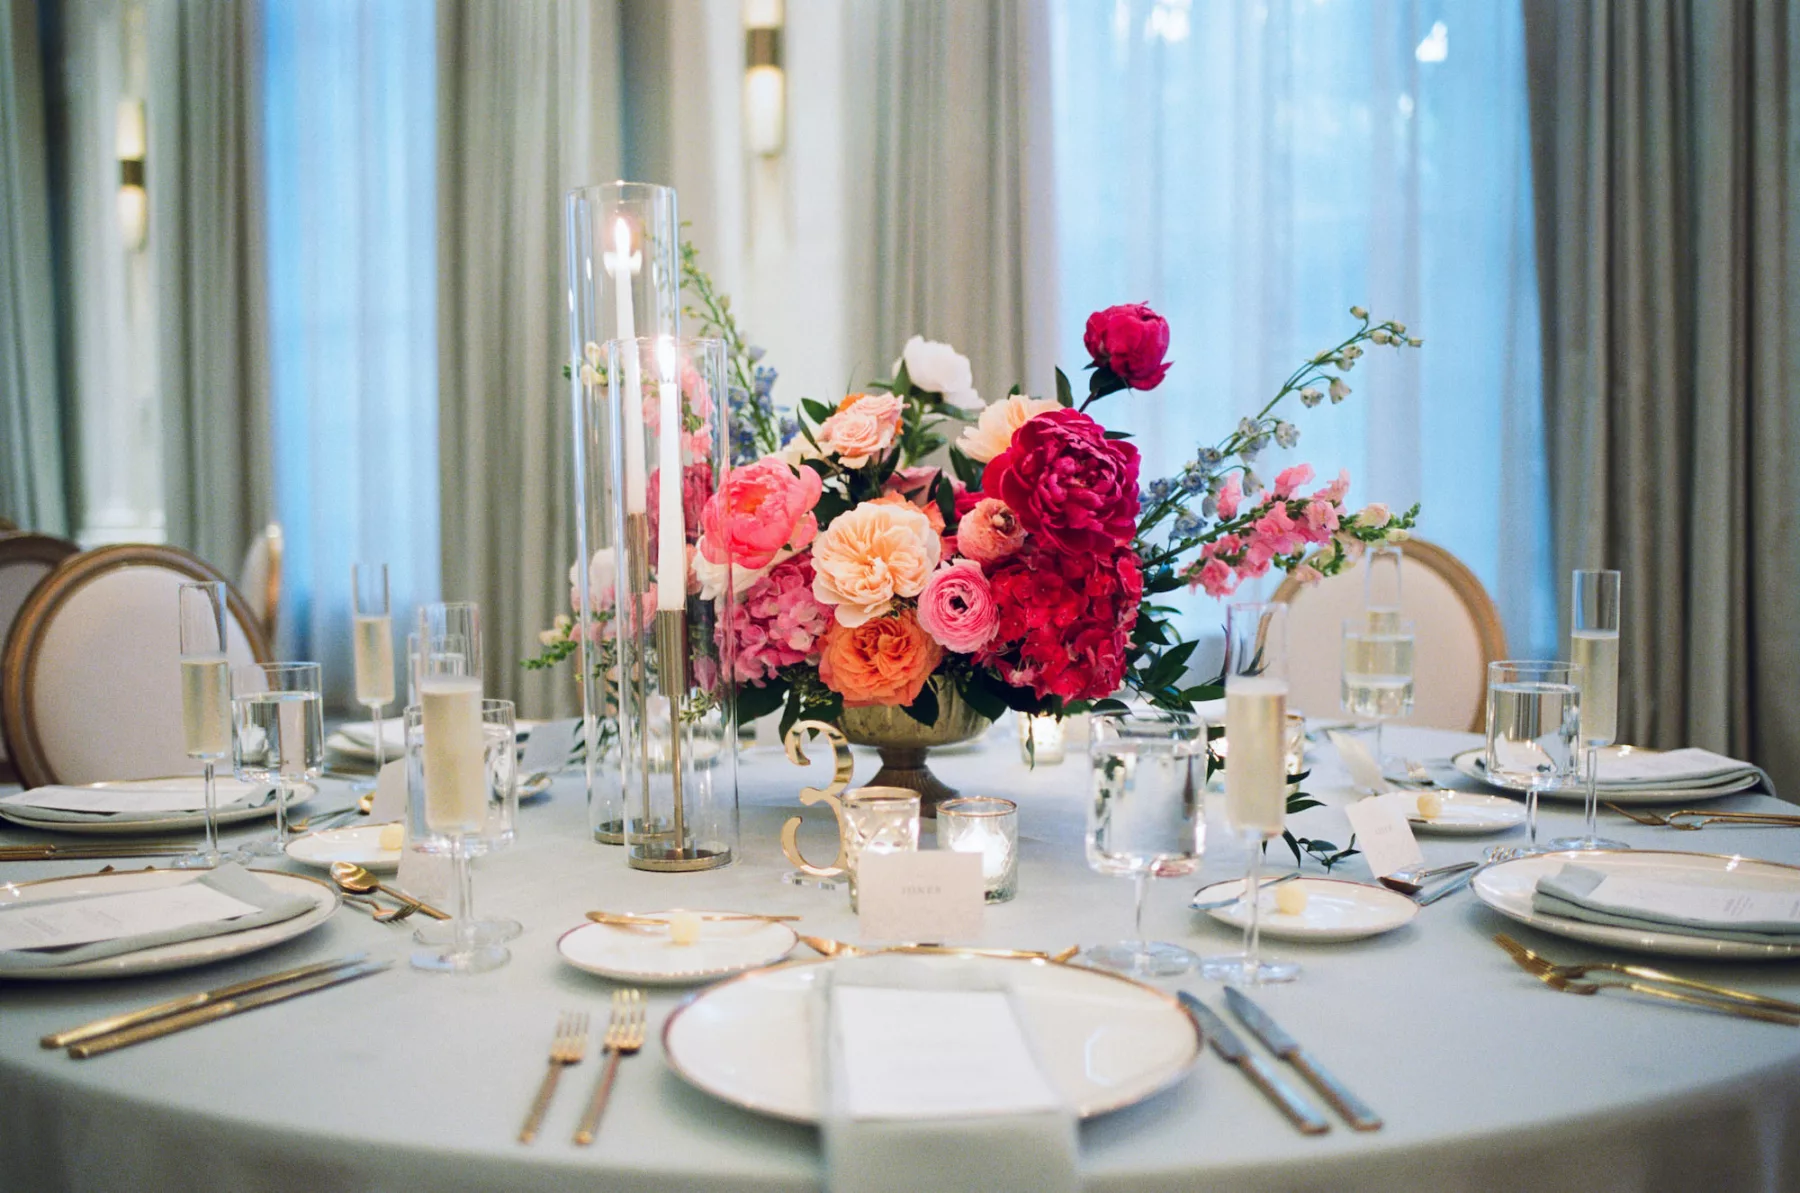 Luxurious Pink and Blue Wedding Reception Centerpiece Tablescape Decor Ideas | Pink Anemones and Hydrangeas, Orange Garden Roses, Blue Stock Flowers | Tampa Bay Florist Bruce Wayne Florals